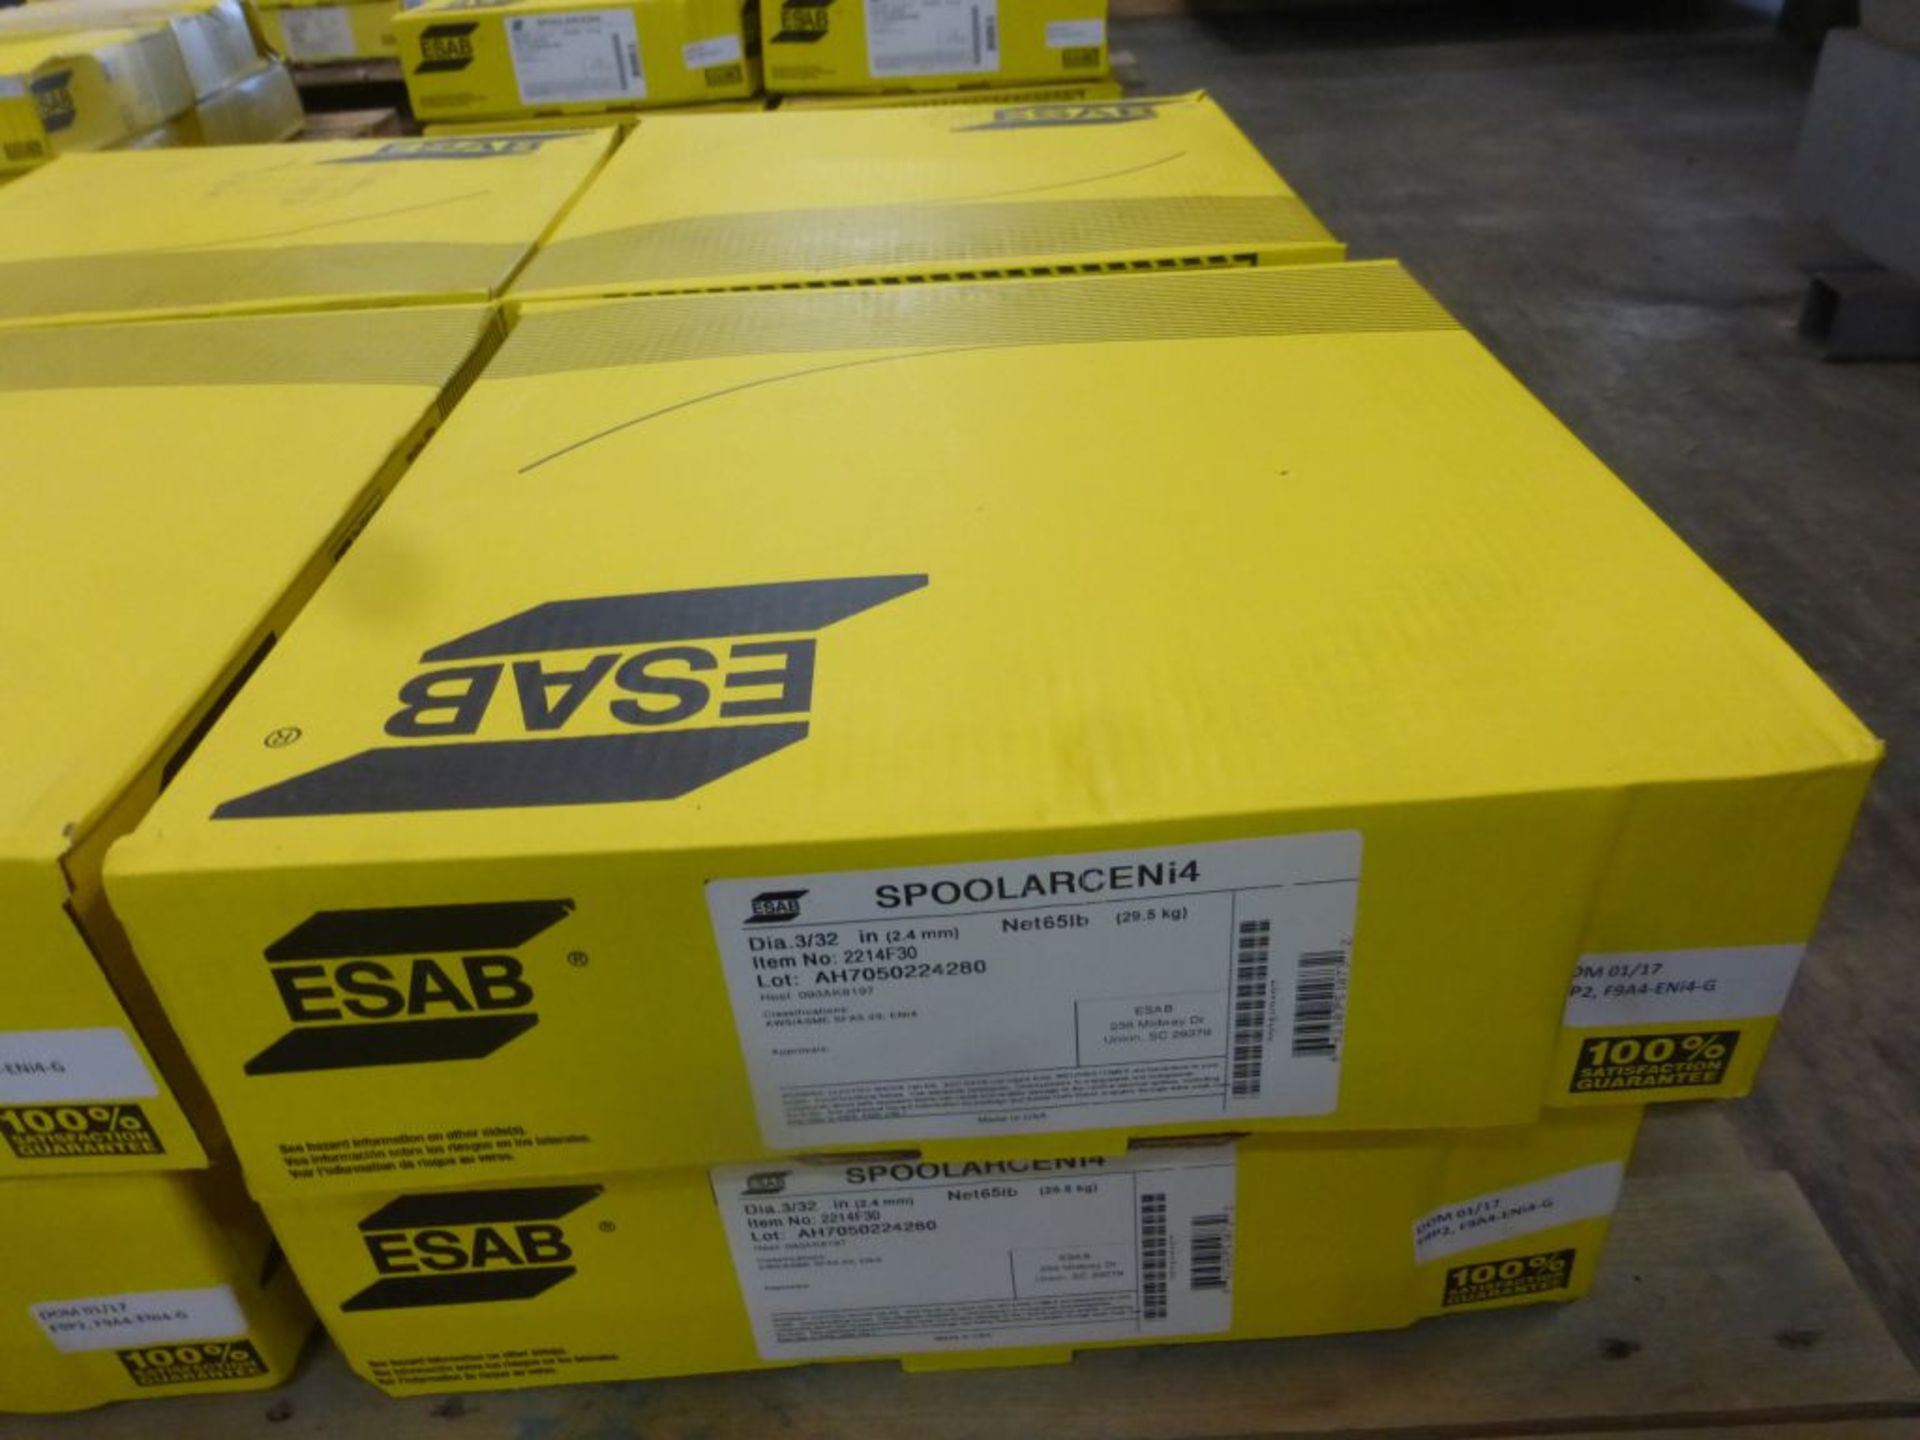 Lot of (8) Boxes of ESAB Welding Wire | SPOOLARCENi4; Item No. 2214F30; Diameter: 3/32"; 65 lbs - Image 4 of 13